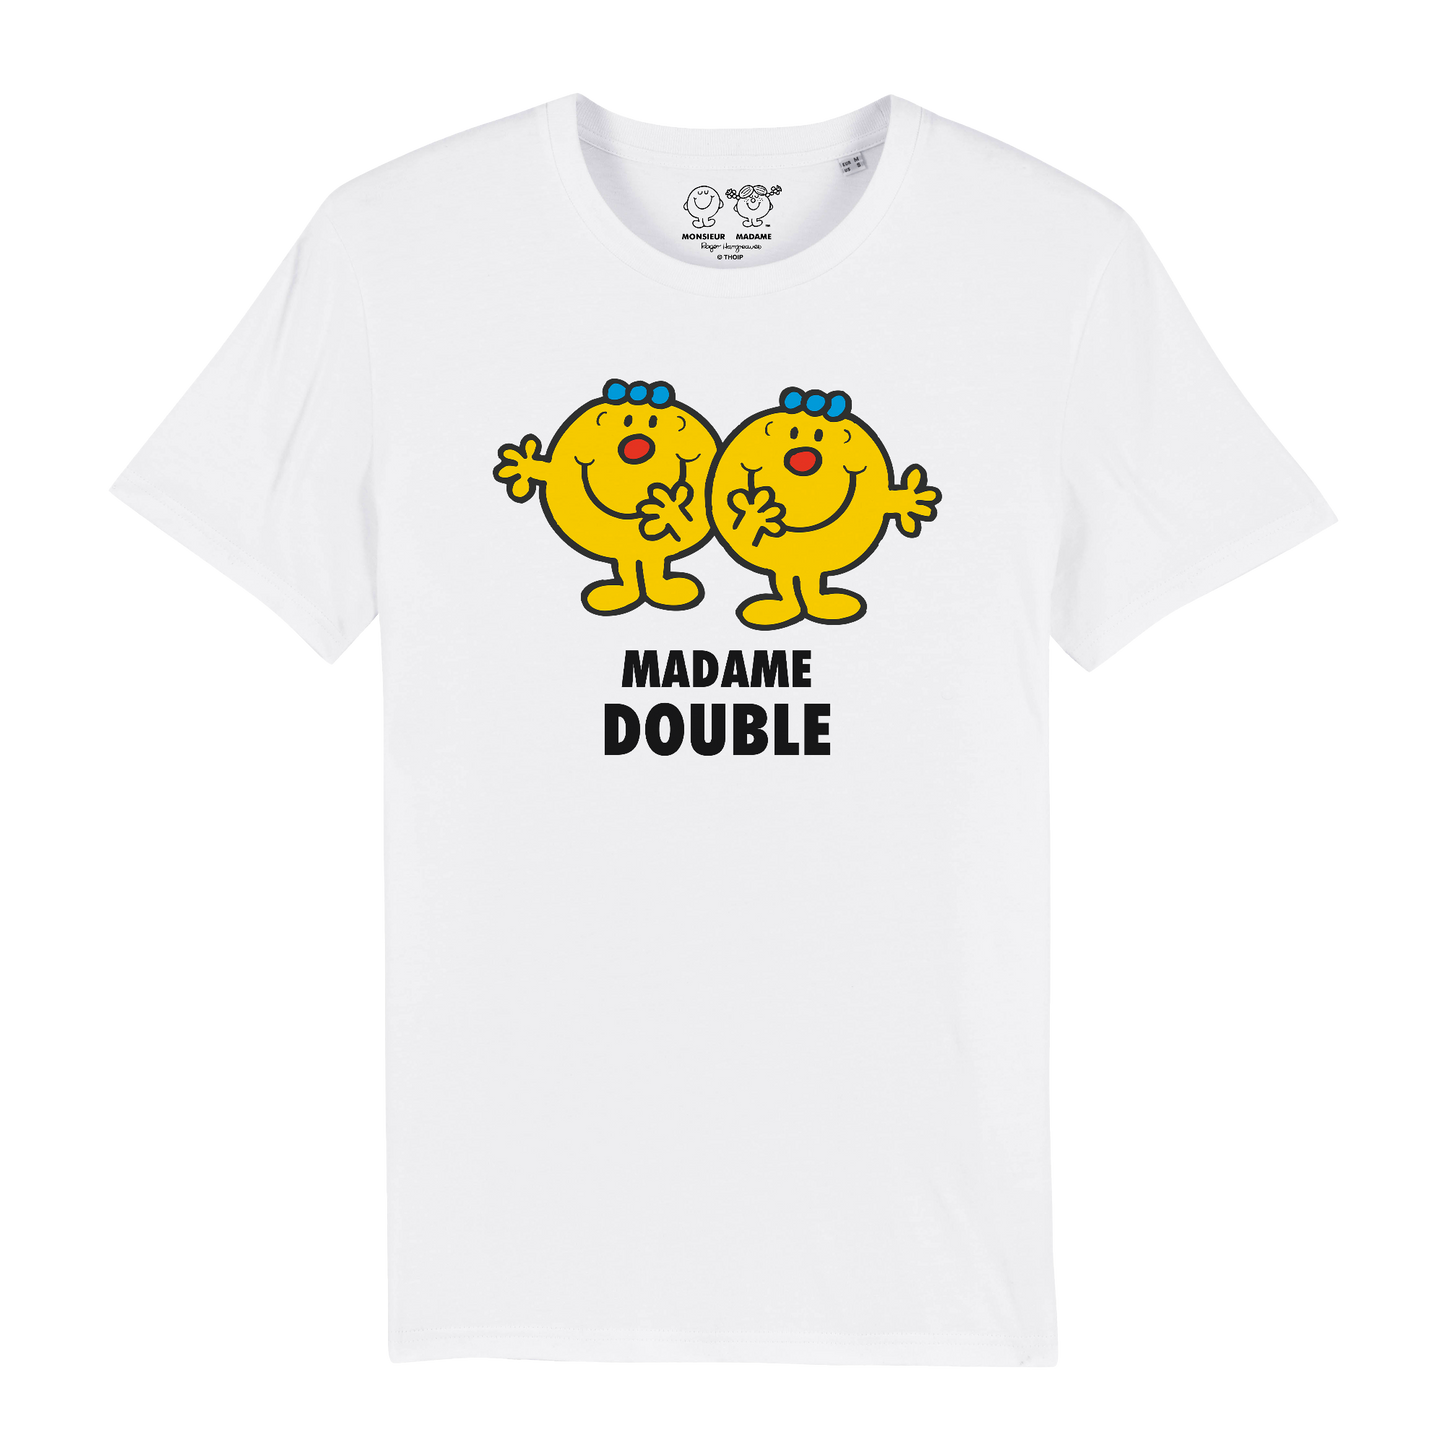 Femme - Tshirt - Madame Double Monsieur Madame